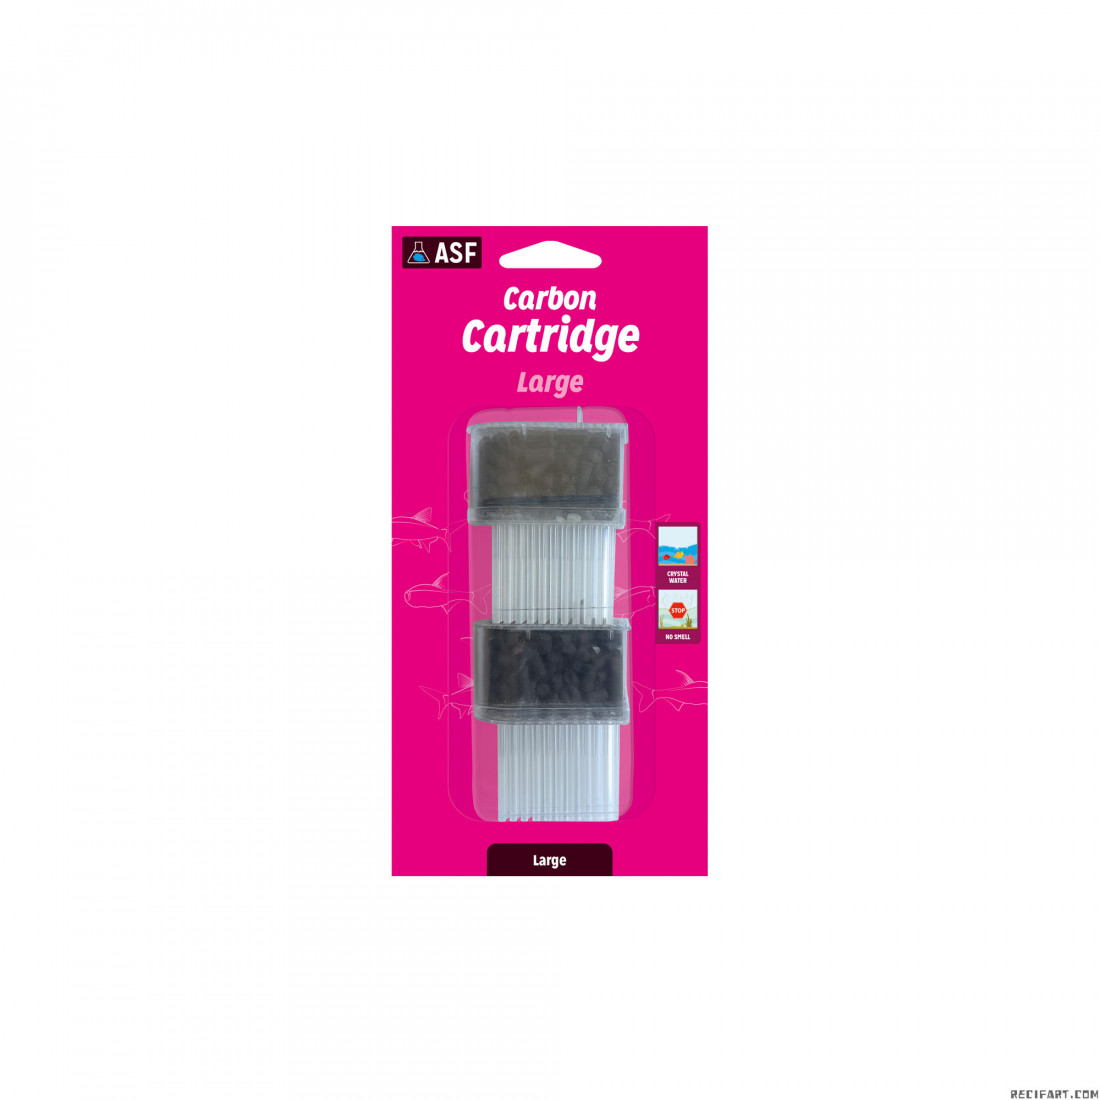 Activated carbon cartridge - NewJet Filter Large